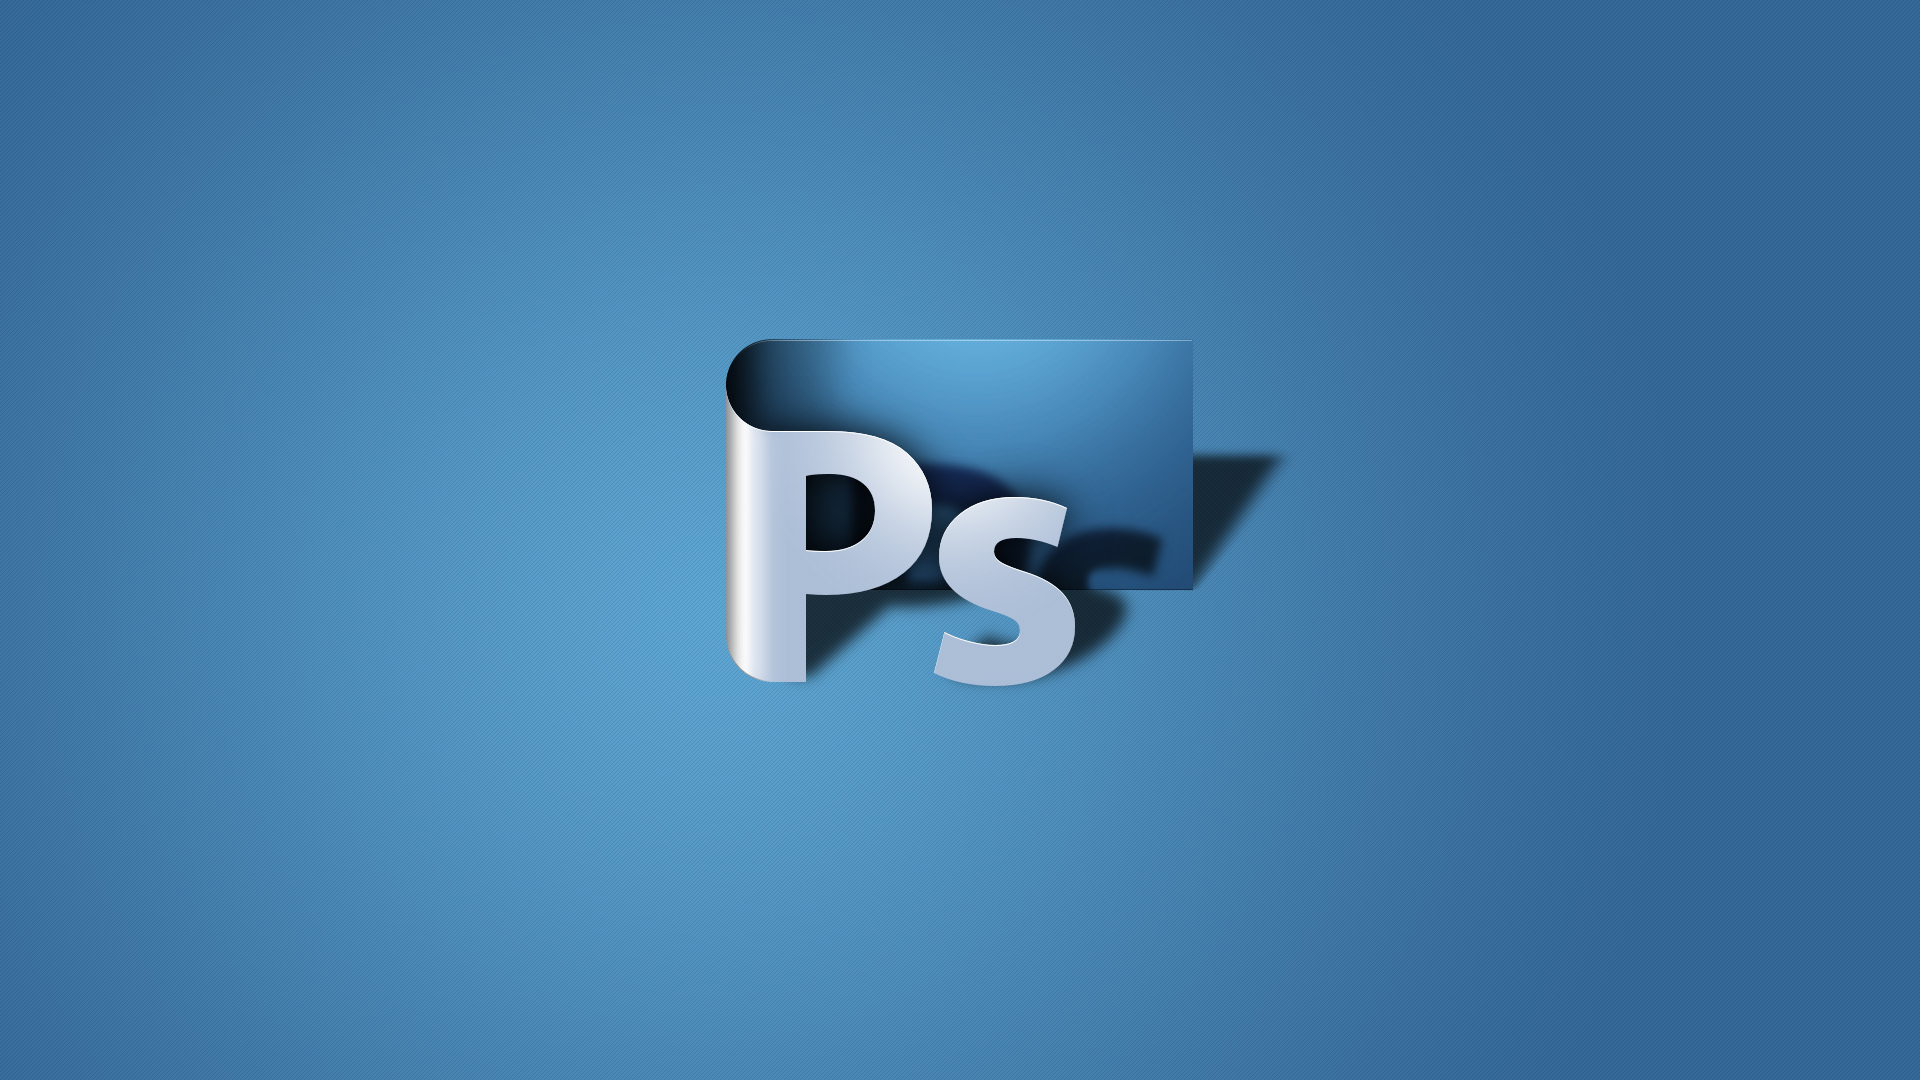 Background, Adobe Photoshop Logo And Free 3d Abstract - Photoshop Logo  Background Hd - 1920x1080 Wallpaper 